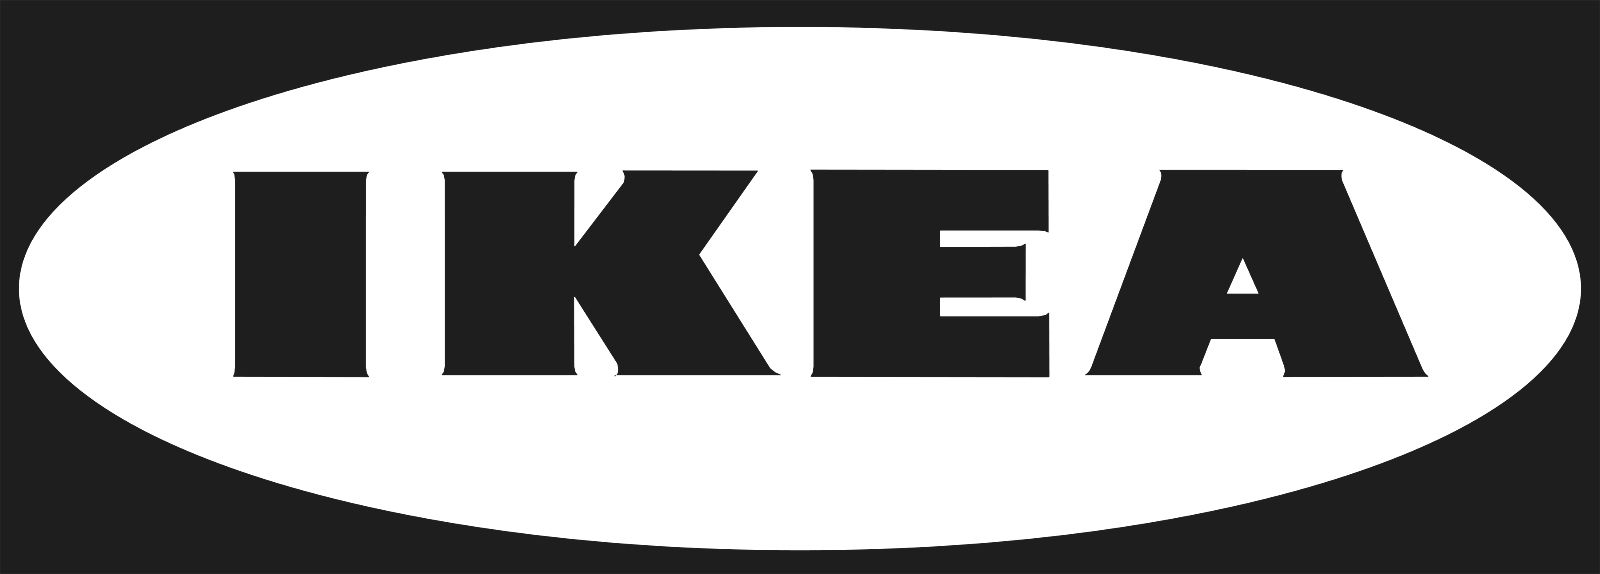 IKEA-Emblem-Criticism.jpg